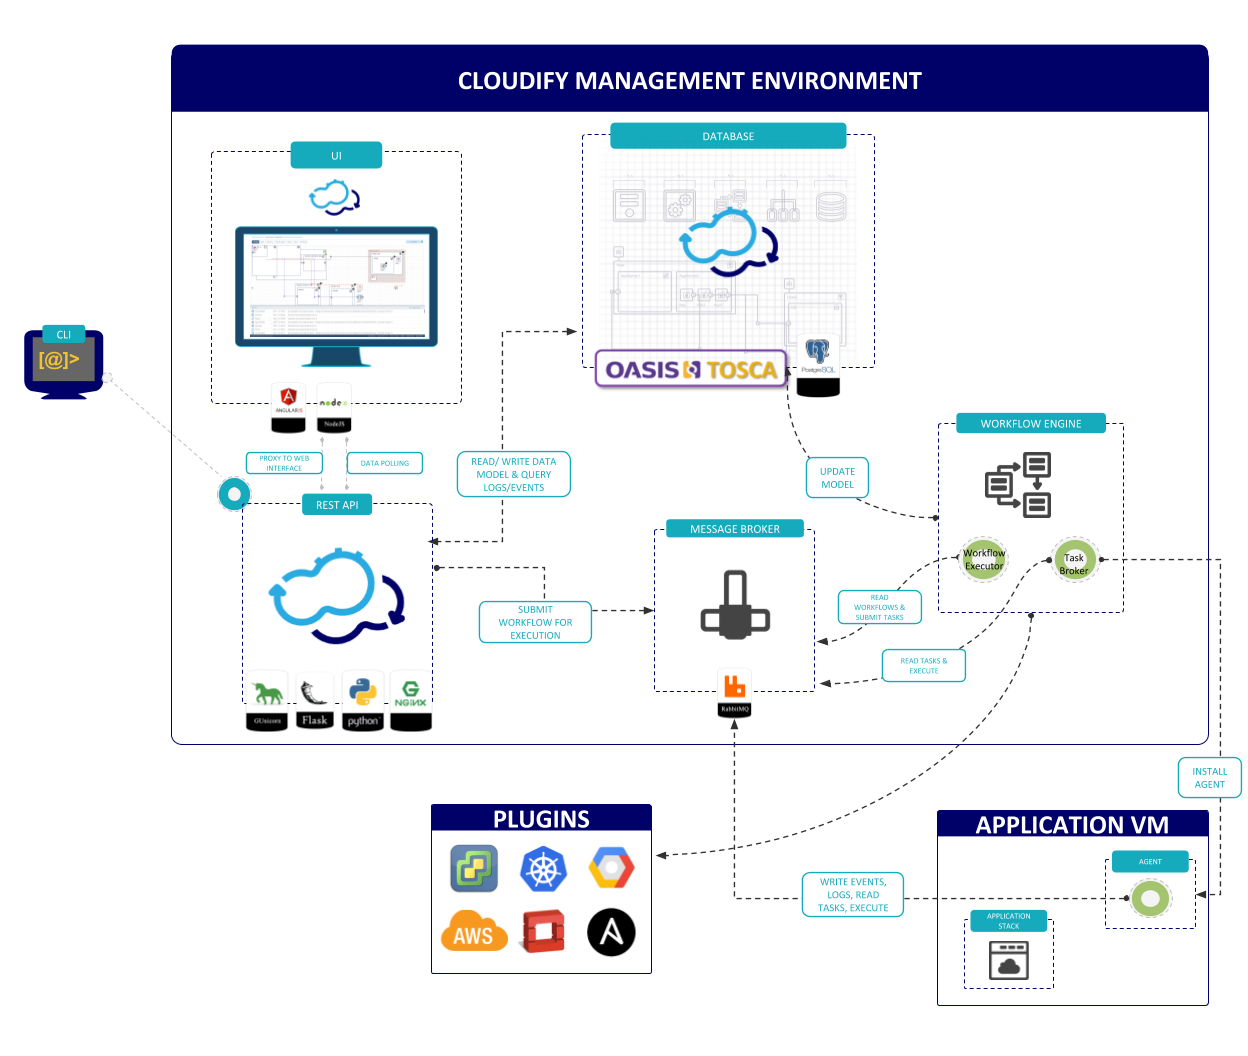 Cloudify components